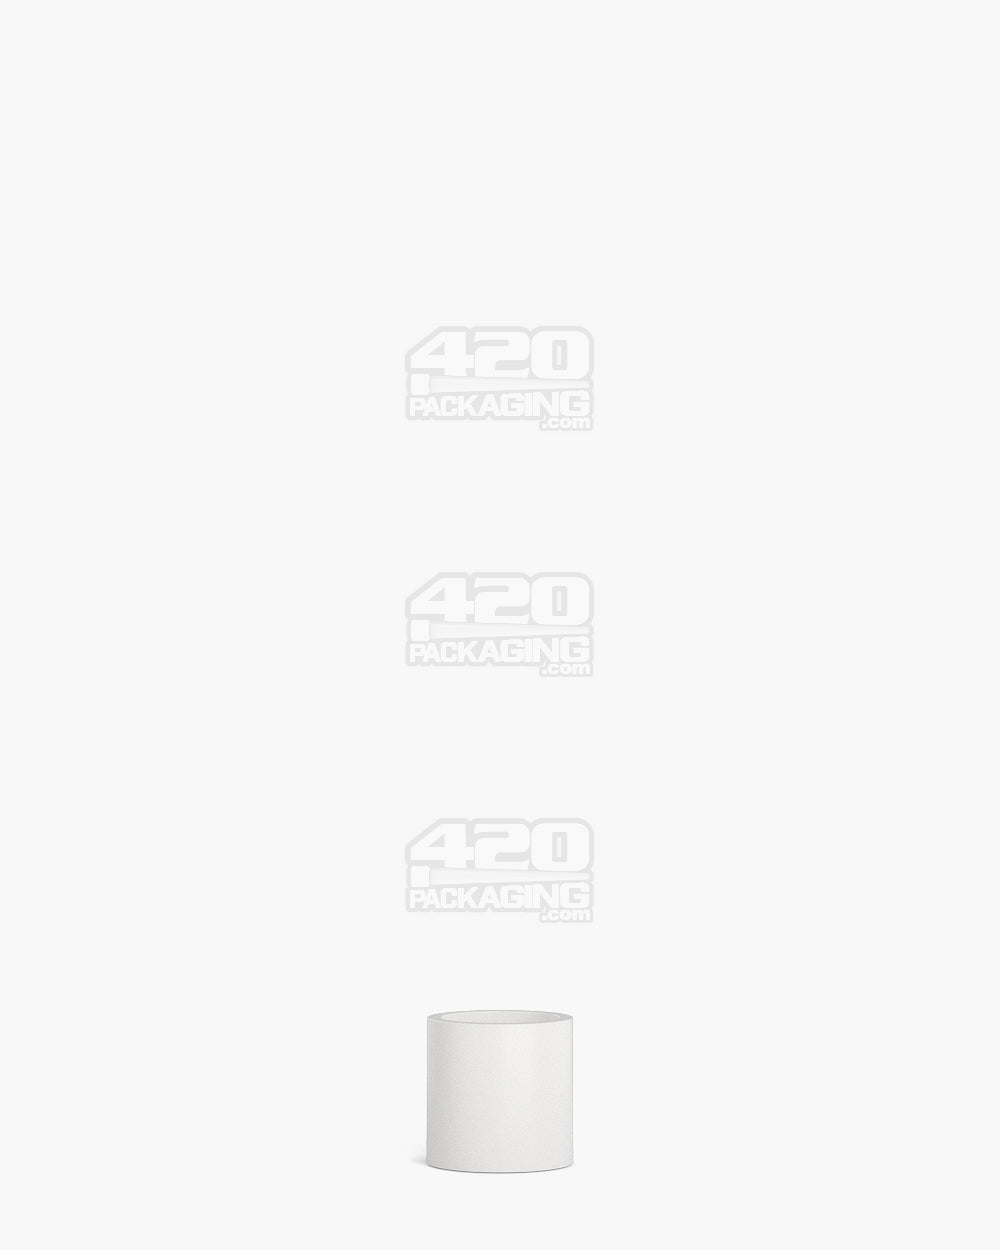 8mm Pollen Gear Slim Child Resistant Push Down & Turn Short Flat Plastic Caps - Matte White - 5000/Box - 1